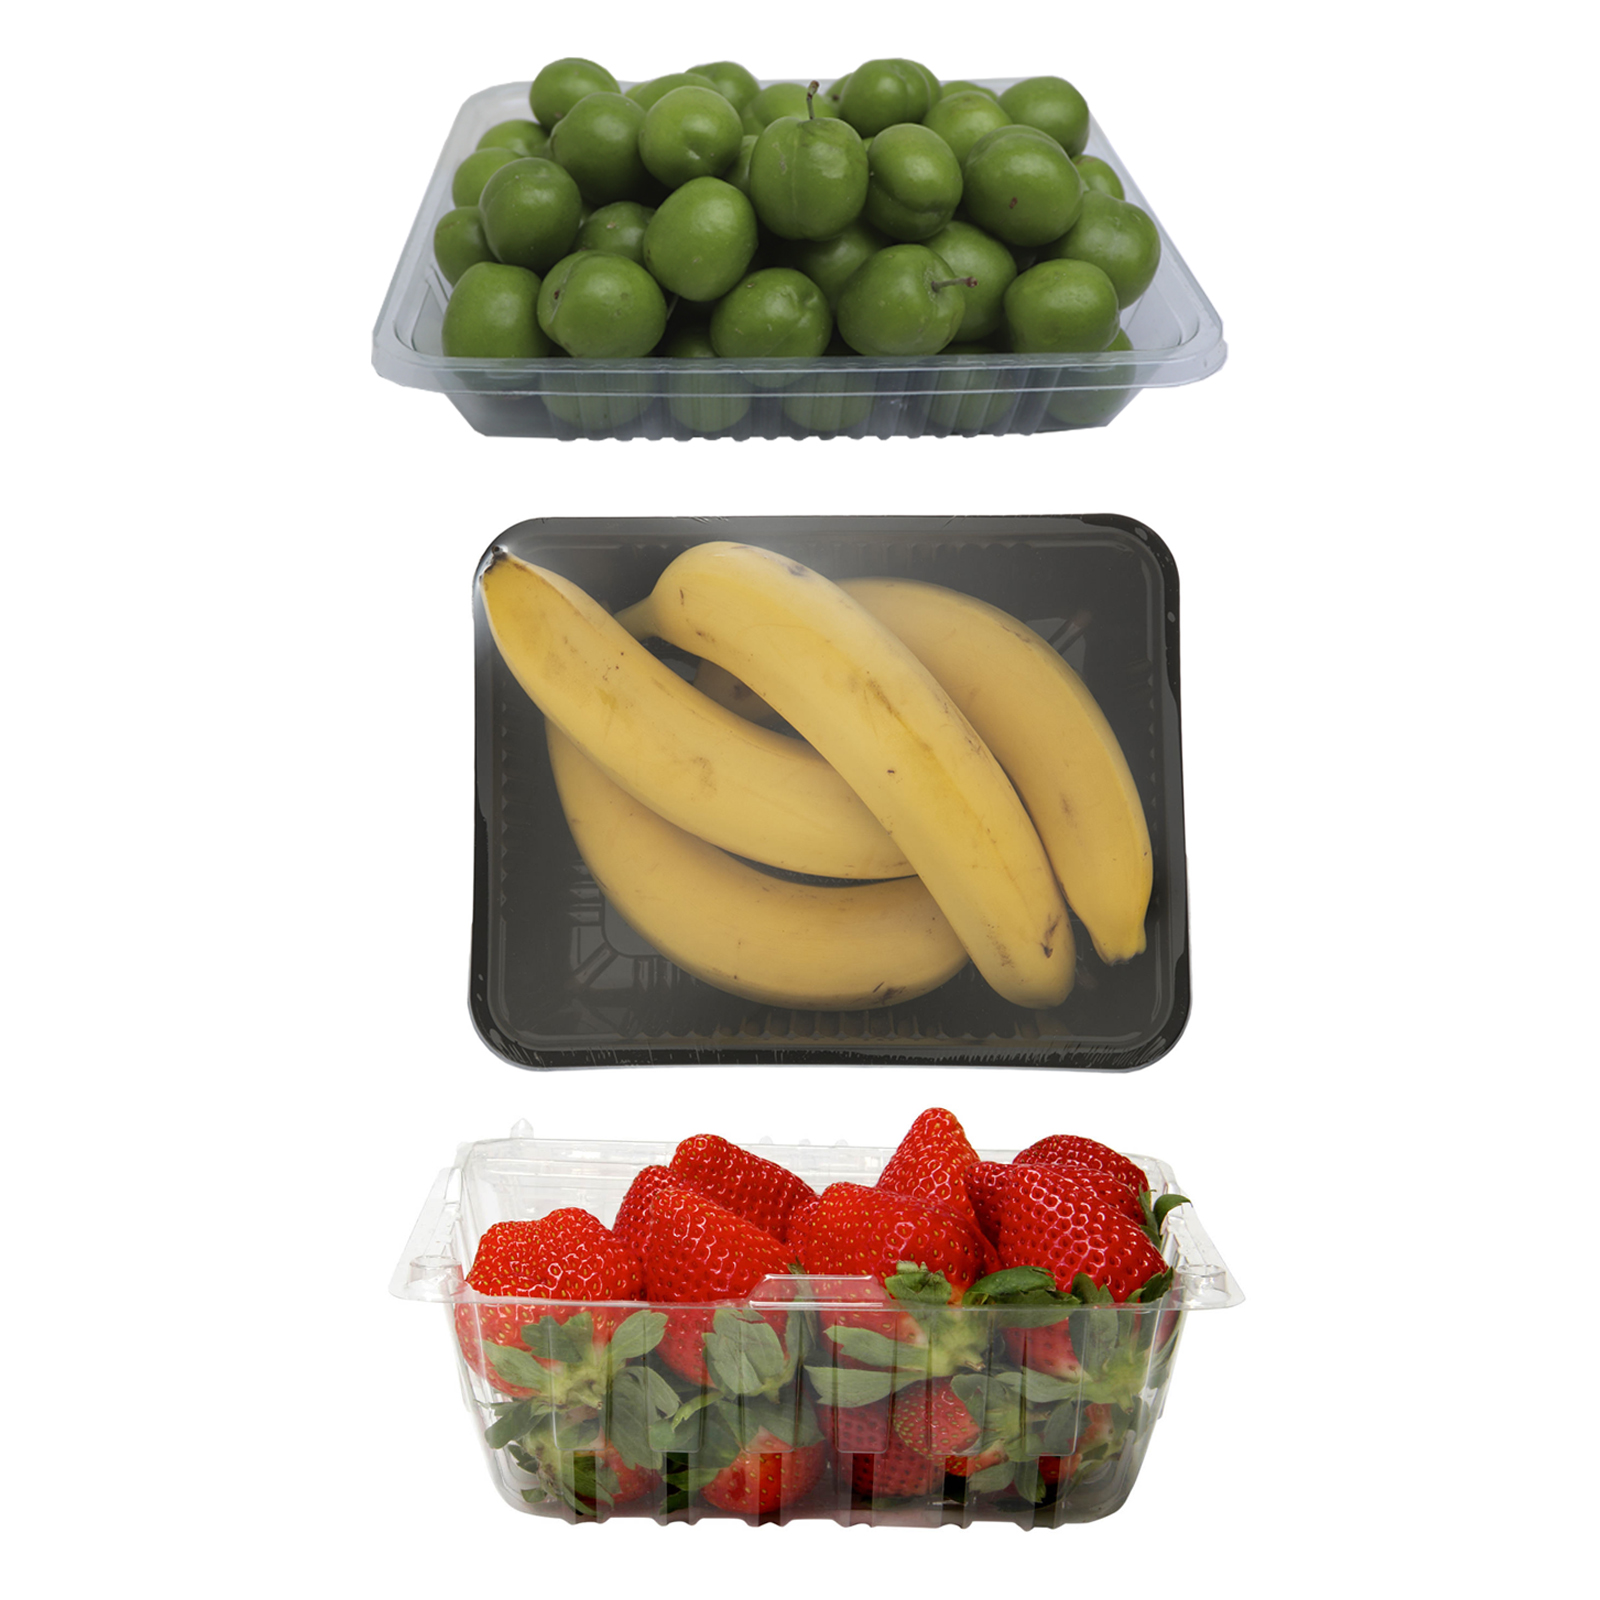 توت فرنگی - 1 کیلوگرم و گوجه سبز - 1 کیلوگرم به همراه موز - 1 کیلوگرم